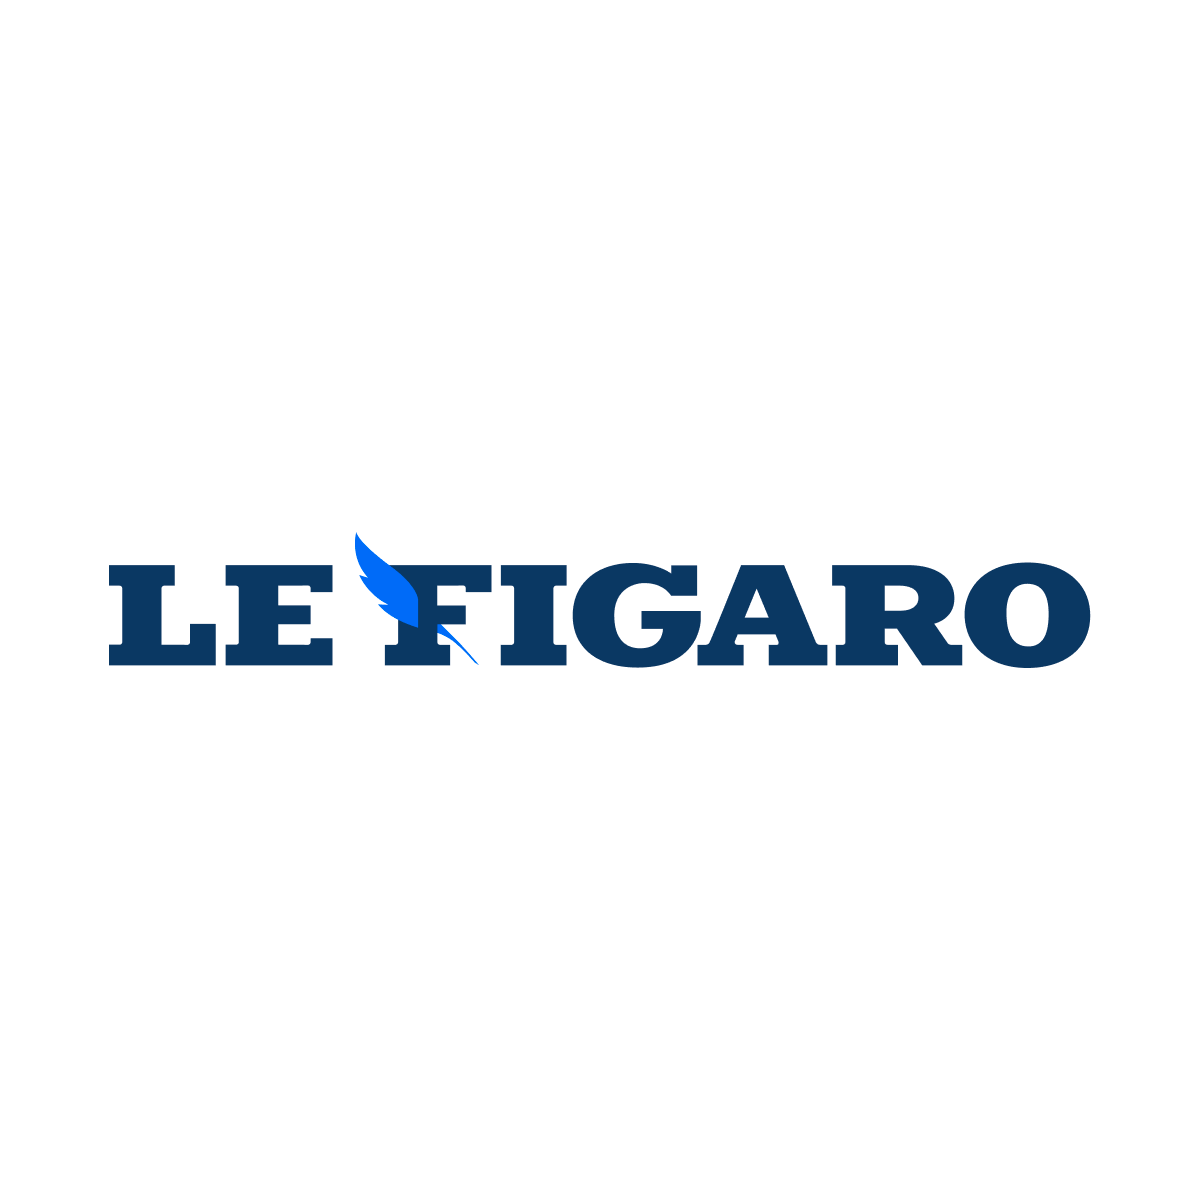 Stade Français will replace PSG at Camp des Loges